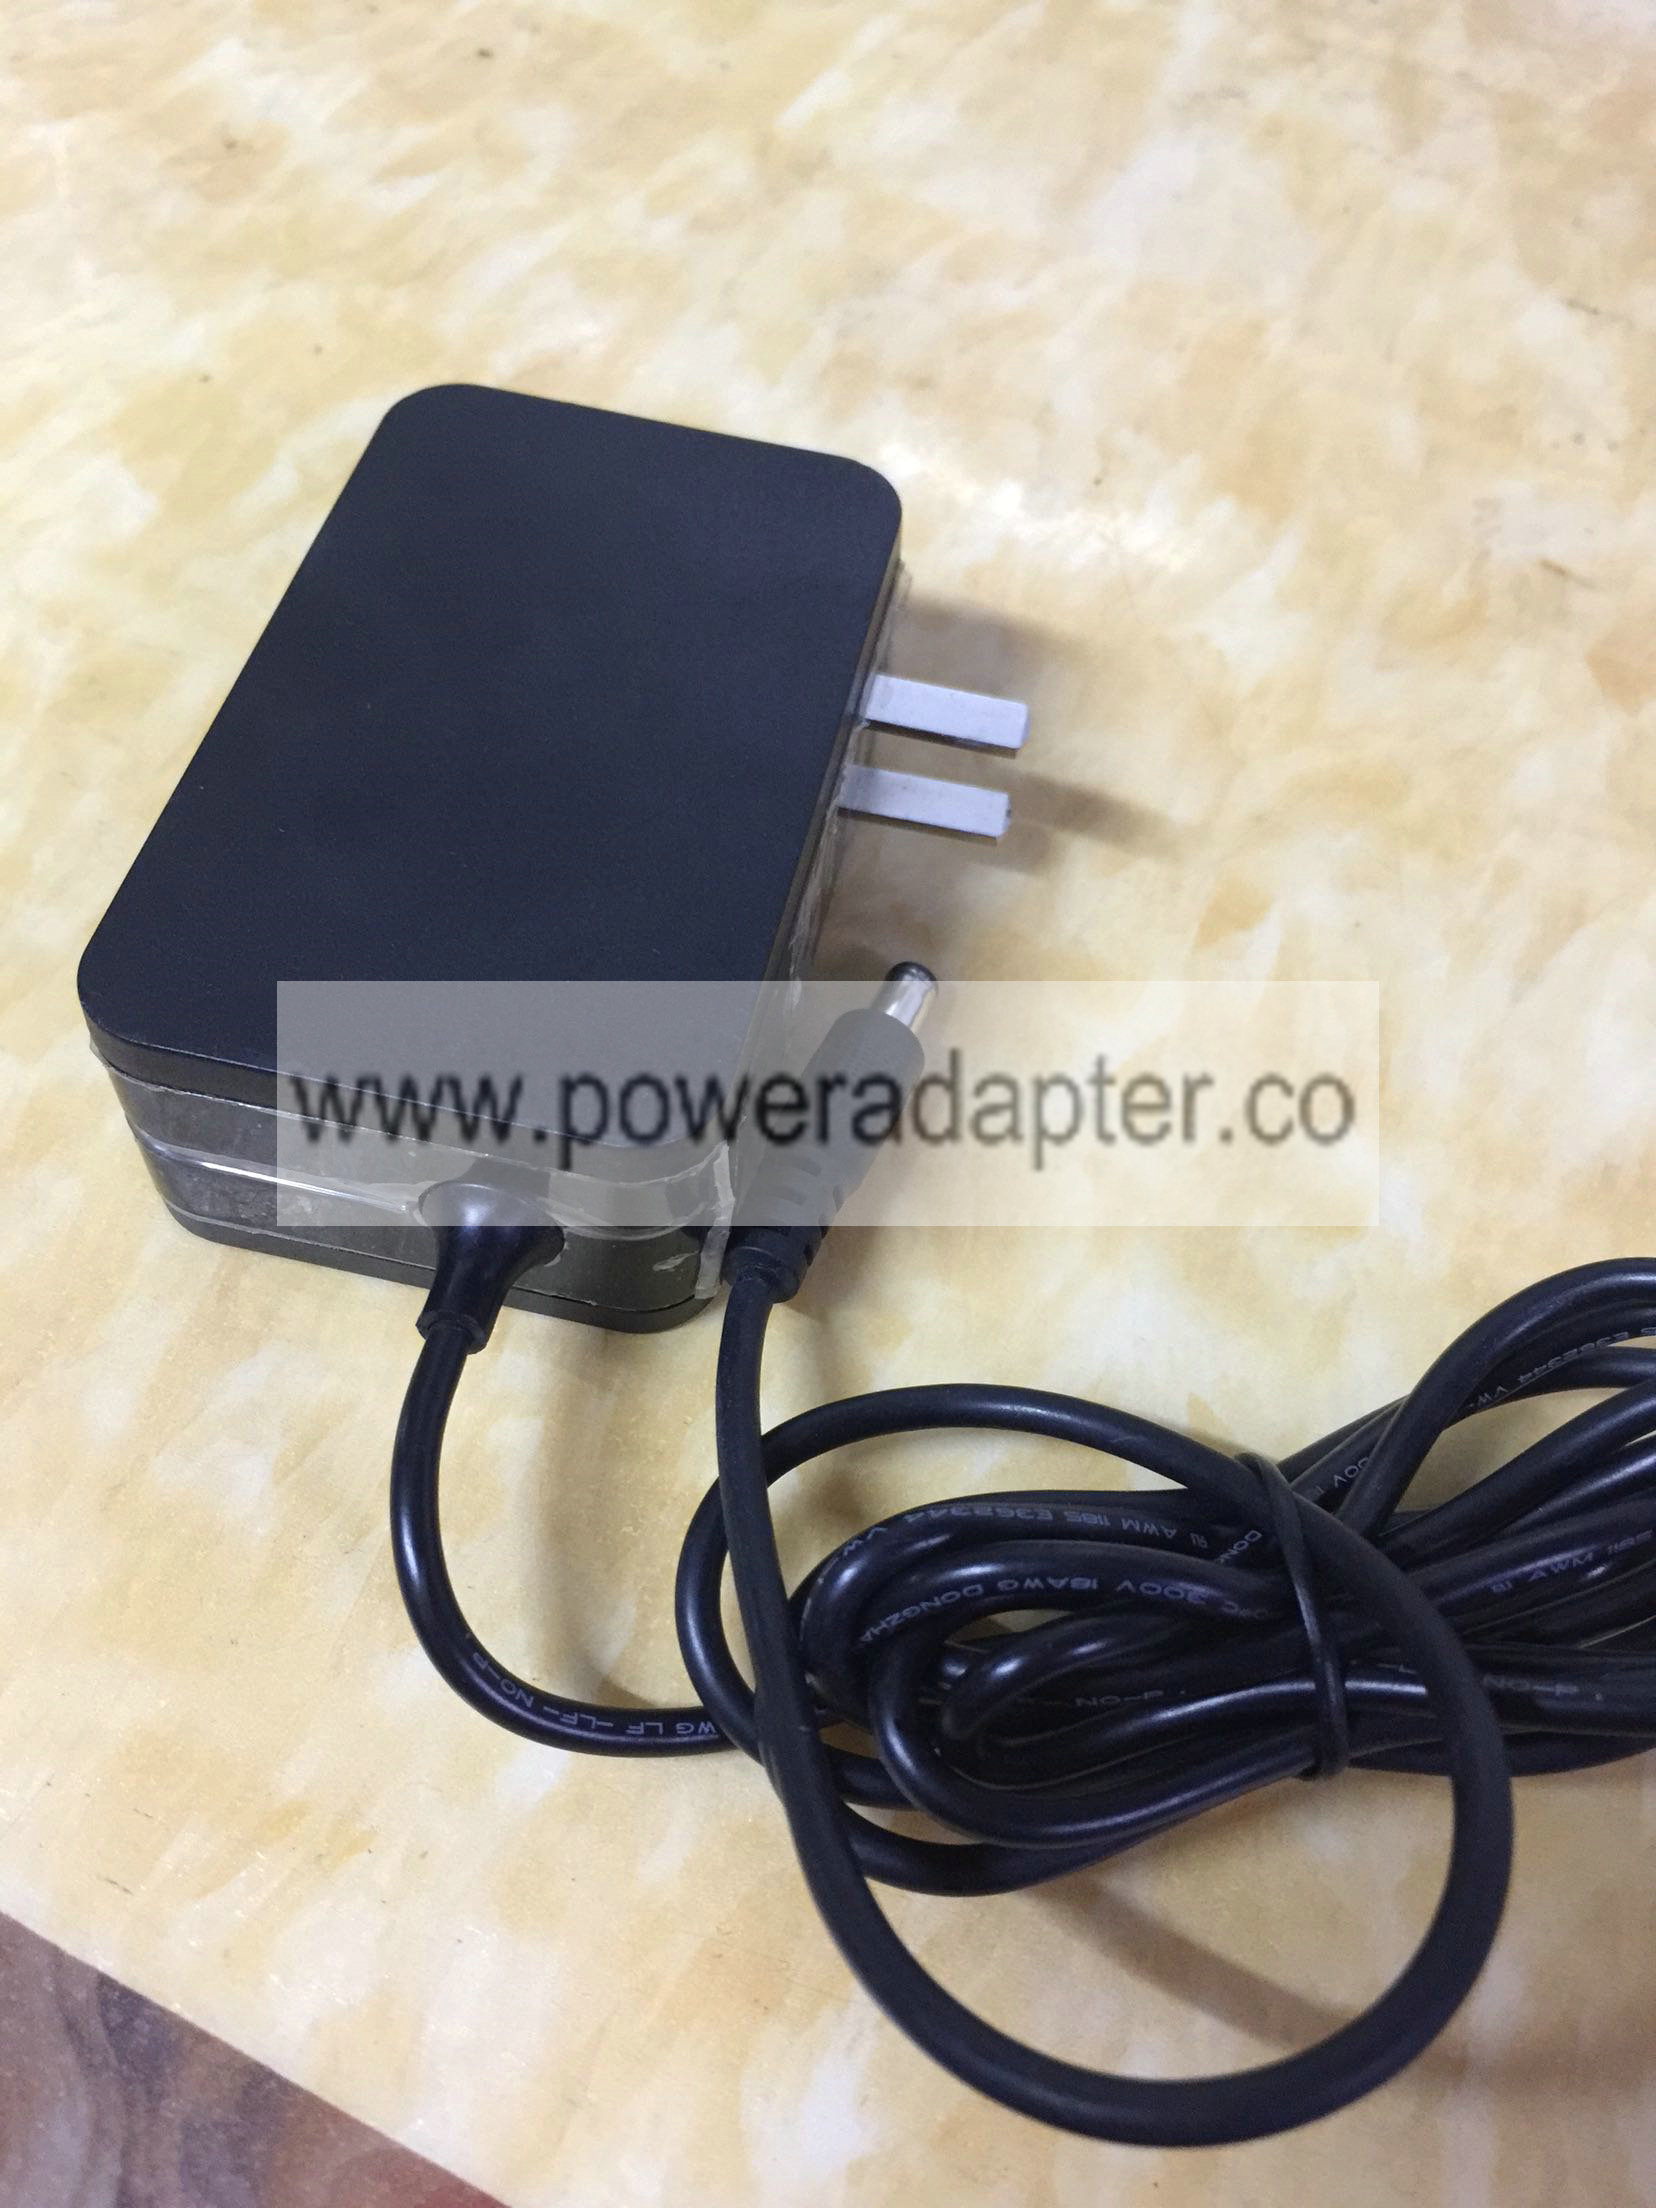 black new phicomm wifi K3C hub ac adapter 12V 3A tip 5.5*2.5 YH-AE-120A300-CH brand: PHICOMM output:12V 3A model:ʌ - Click Image to Close